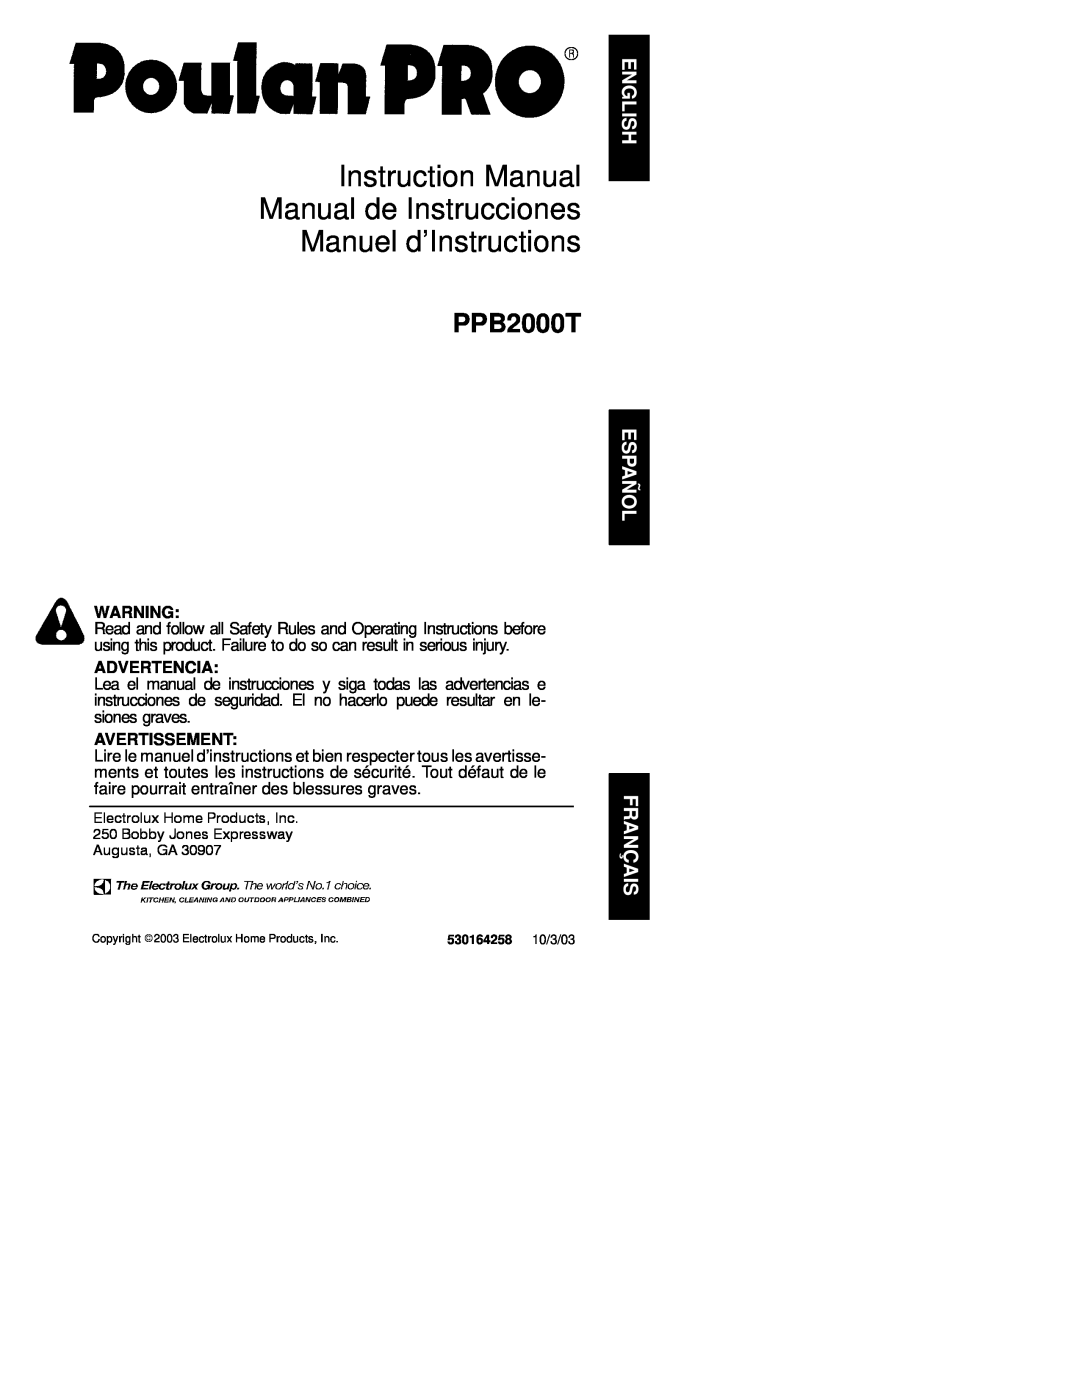 Poulan 530164258 instruction manual Advertencia, Avertissement, Manuel d’Instructions, PPB2000T 